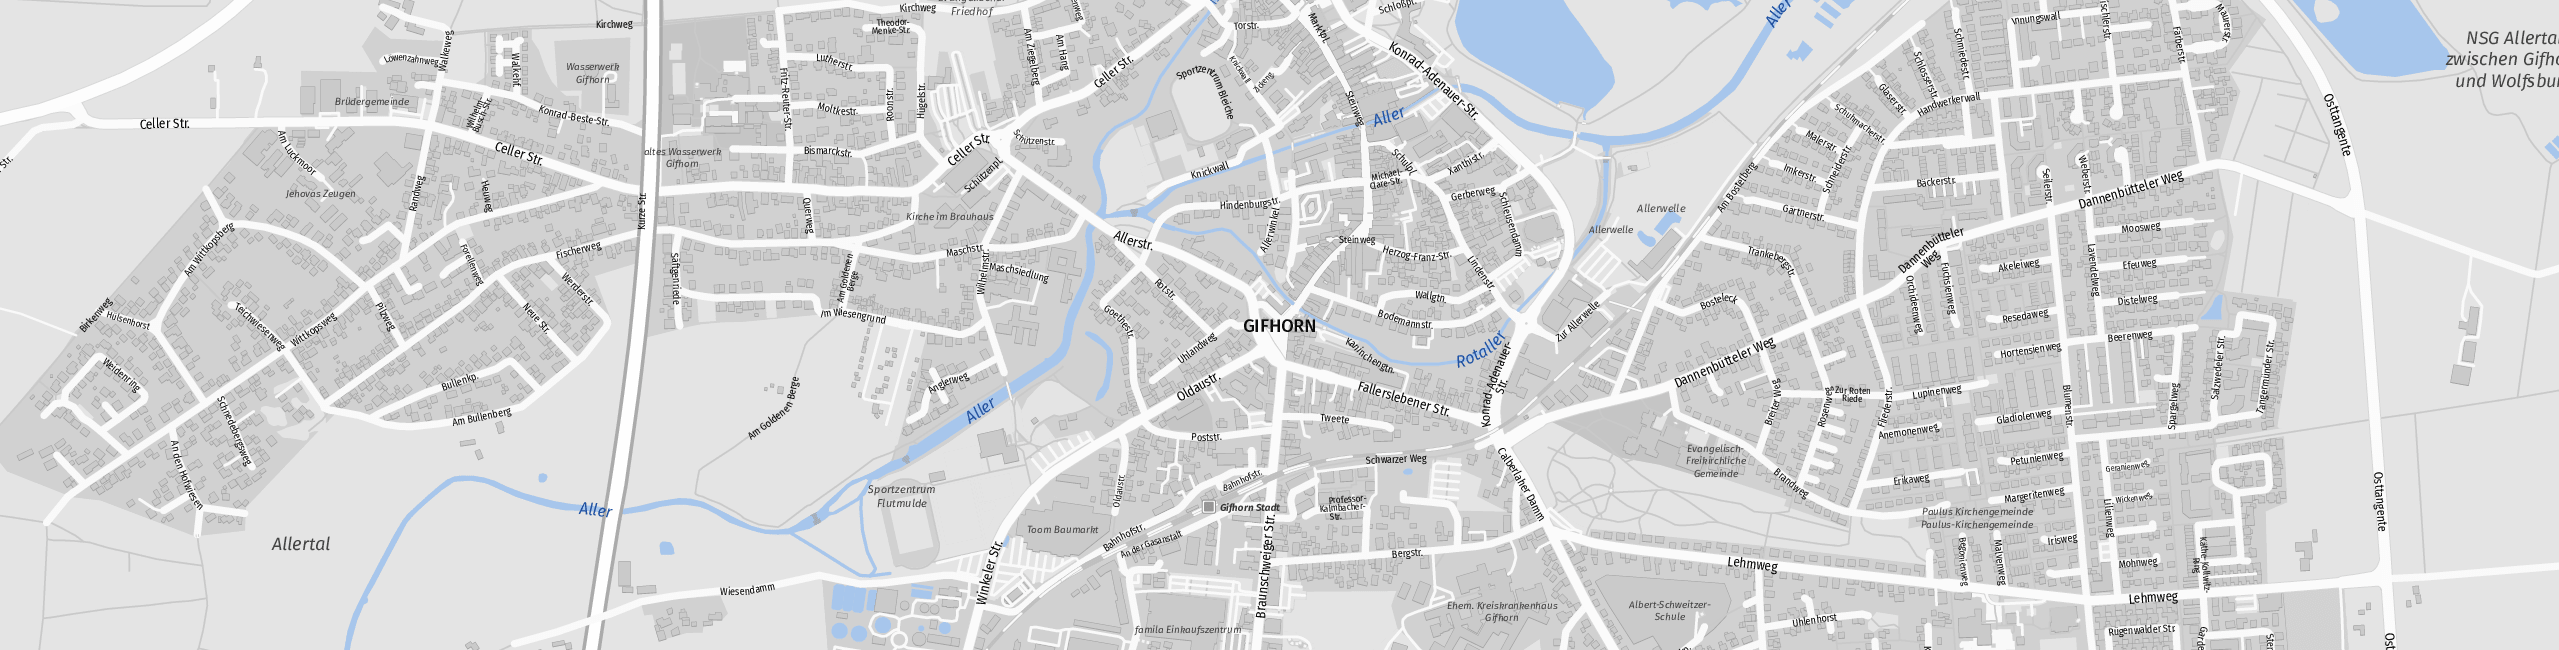 Stadtplan Gifhorn zum Downloaden.